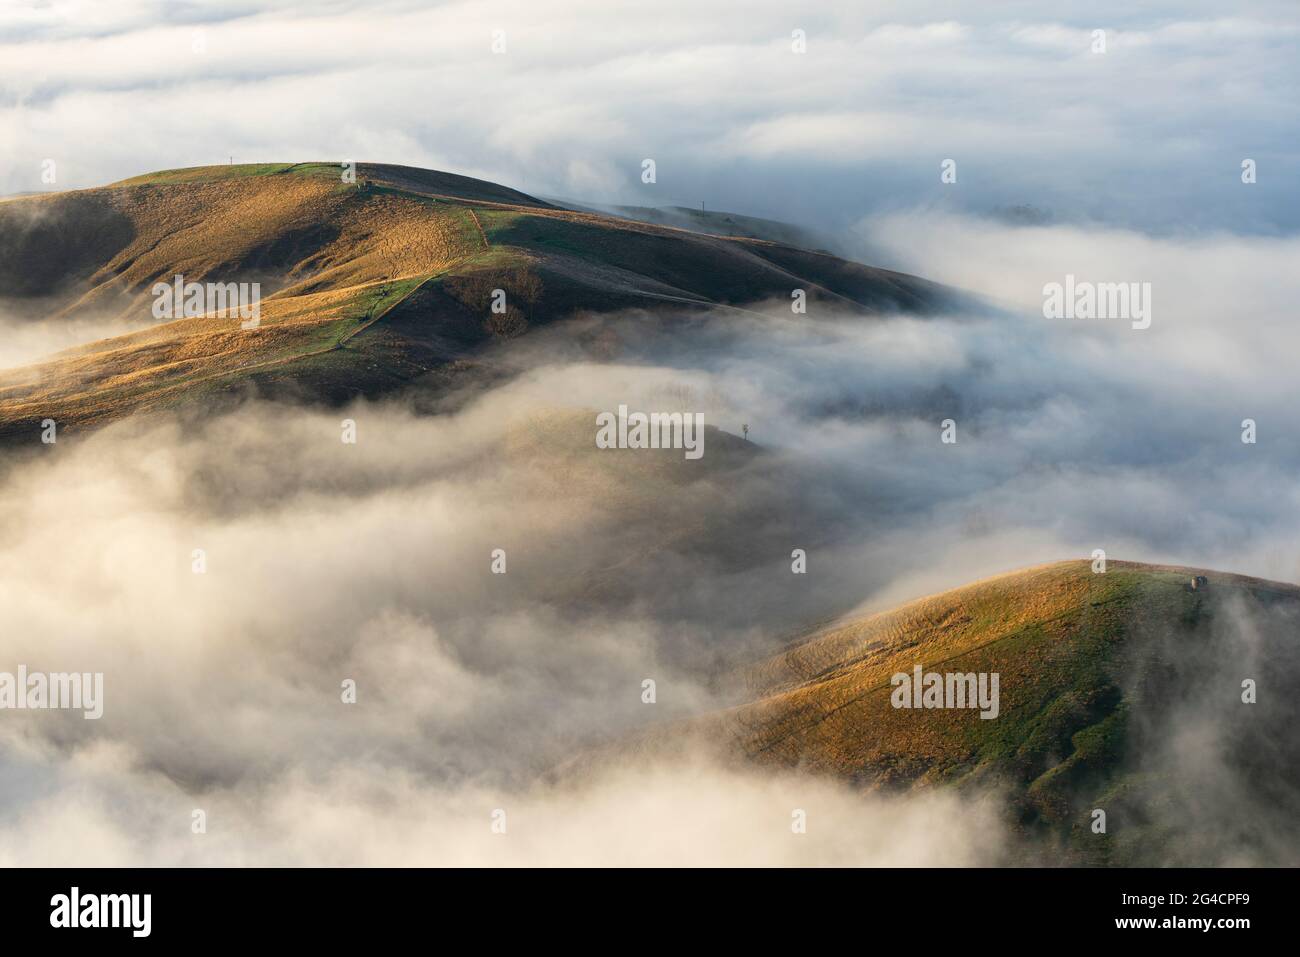 Alba e nebbia mattutina, te Mata Peak, Hawke's Bay, Nuova Zelanda Foto Stock